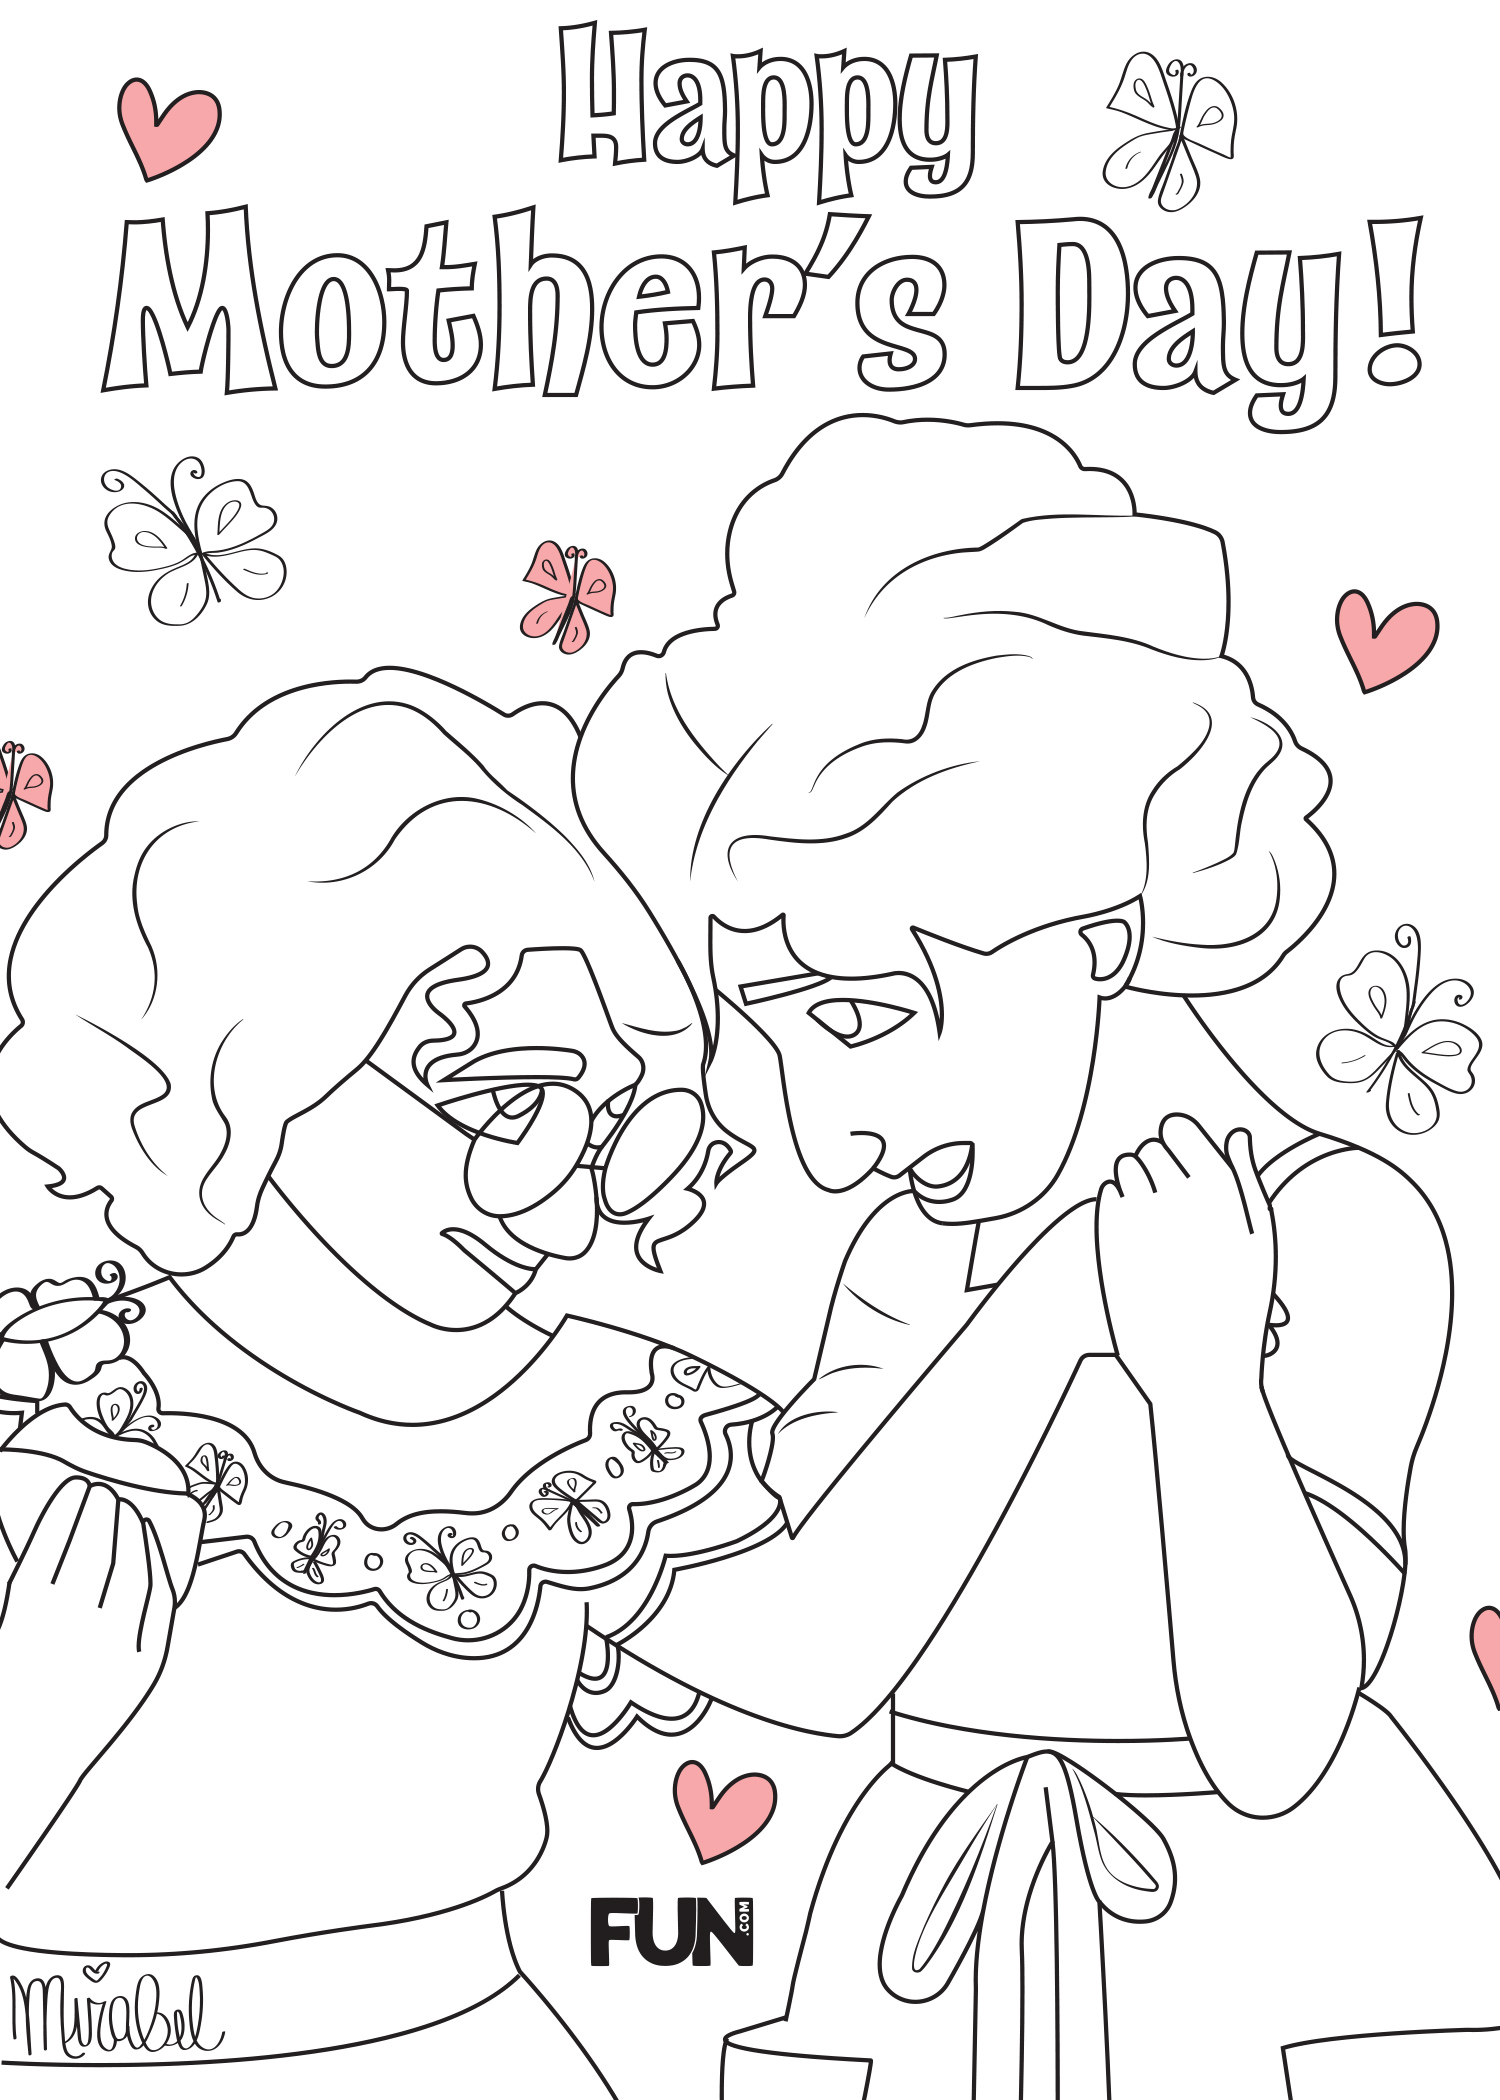 Encanto Mother's Day Card